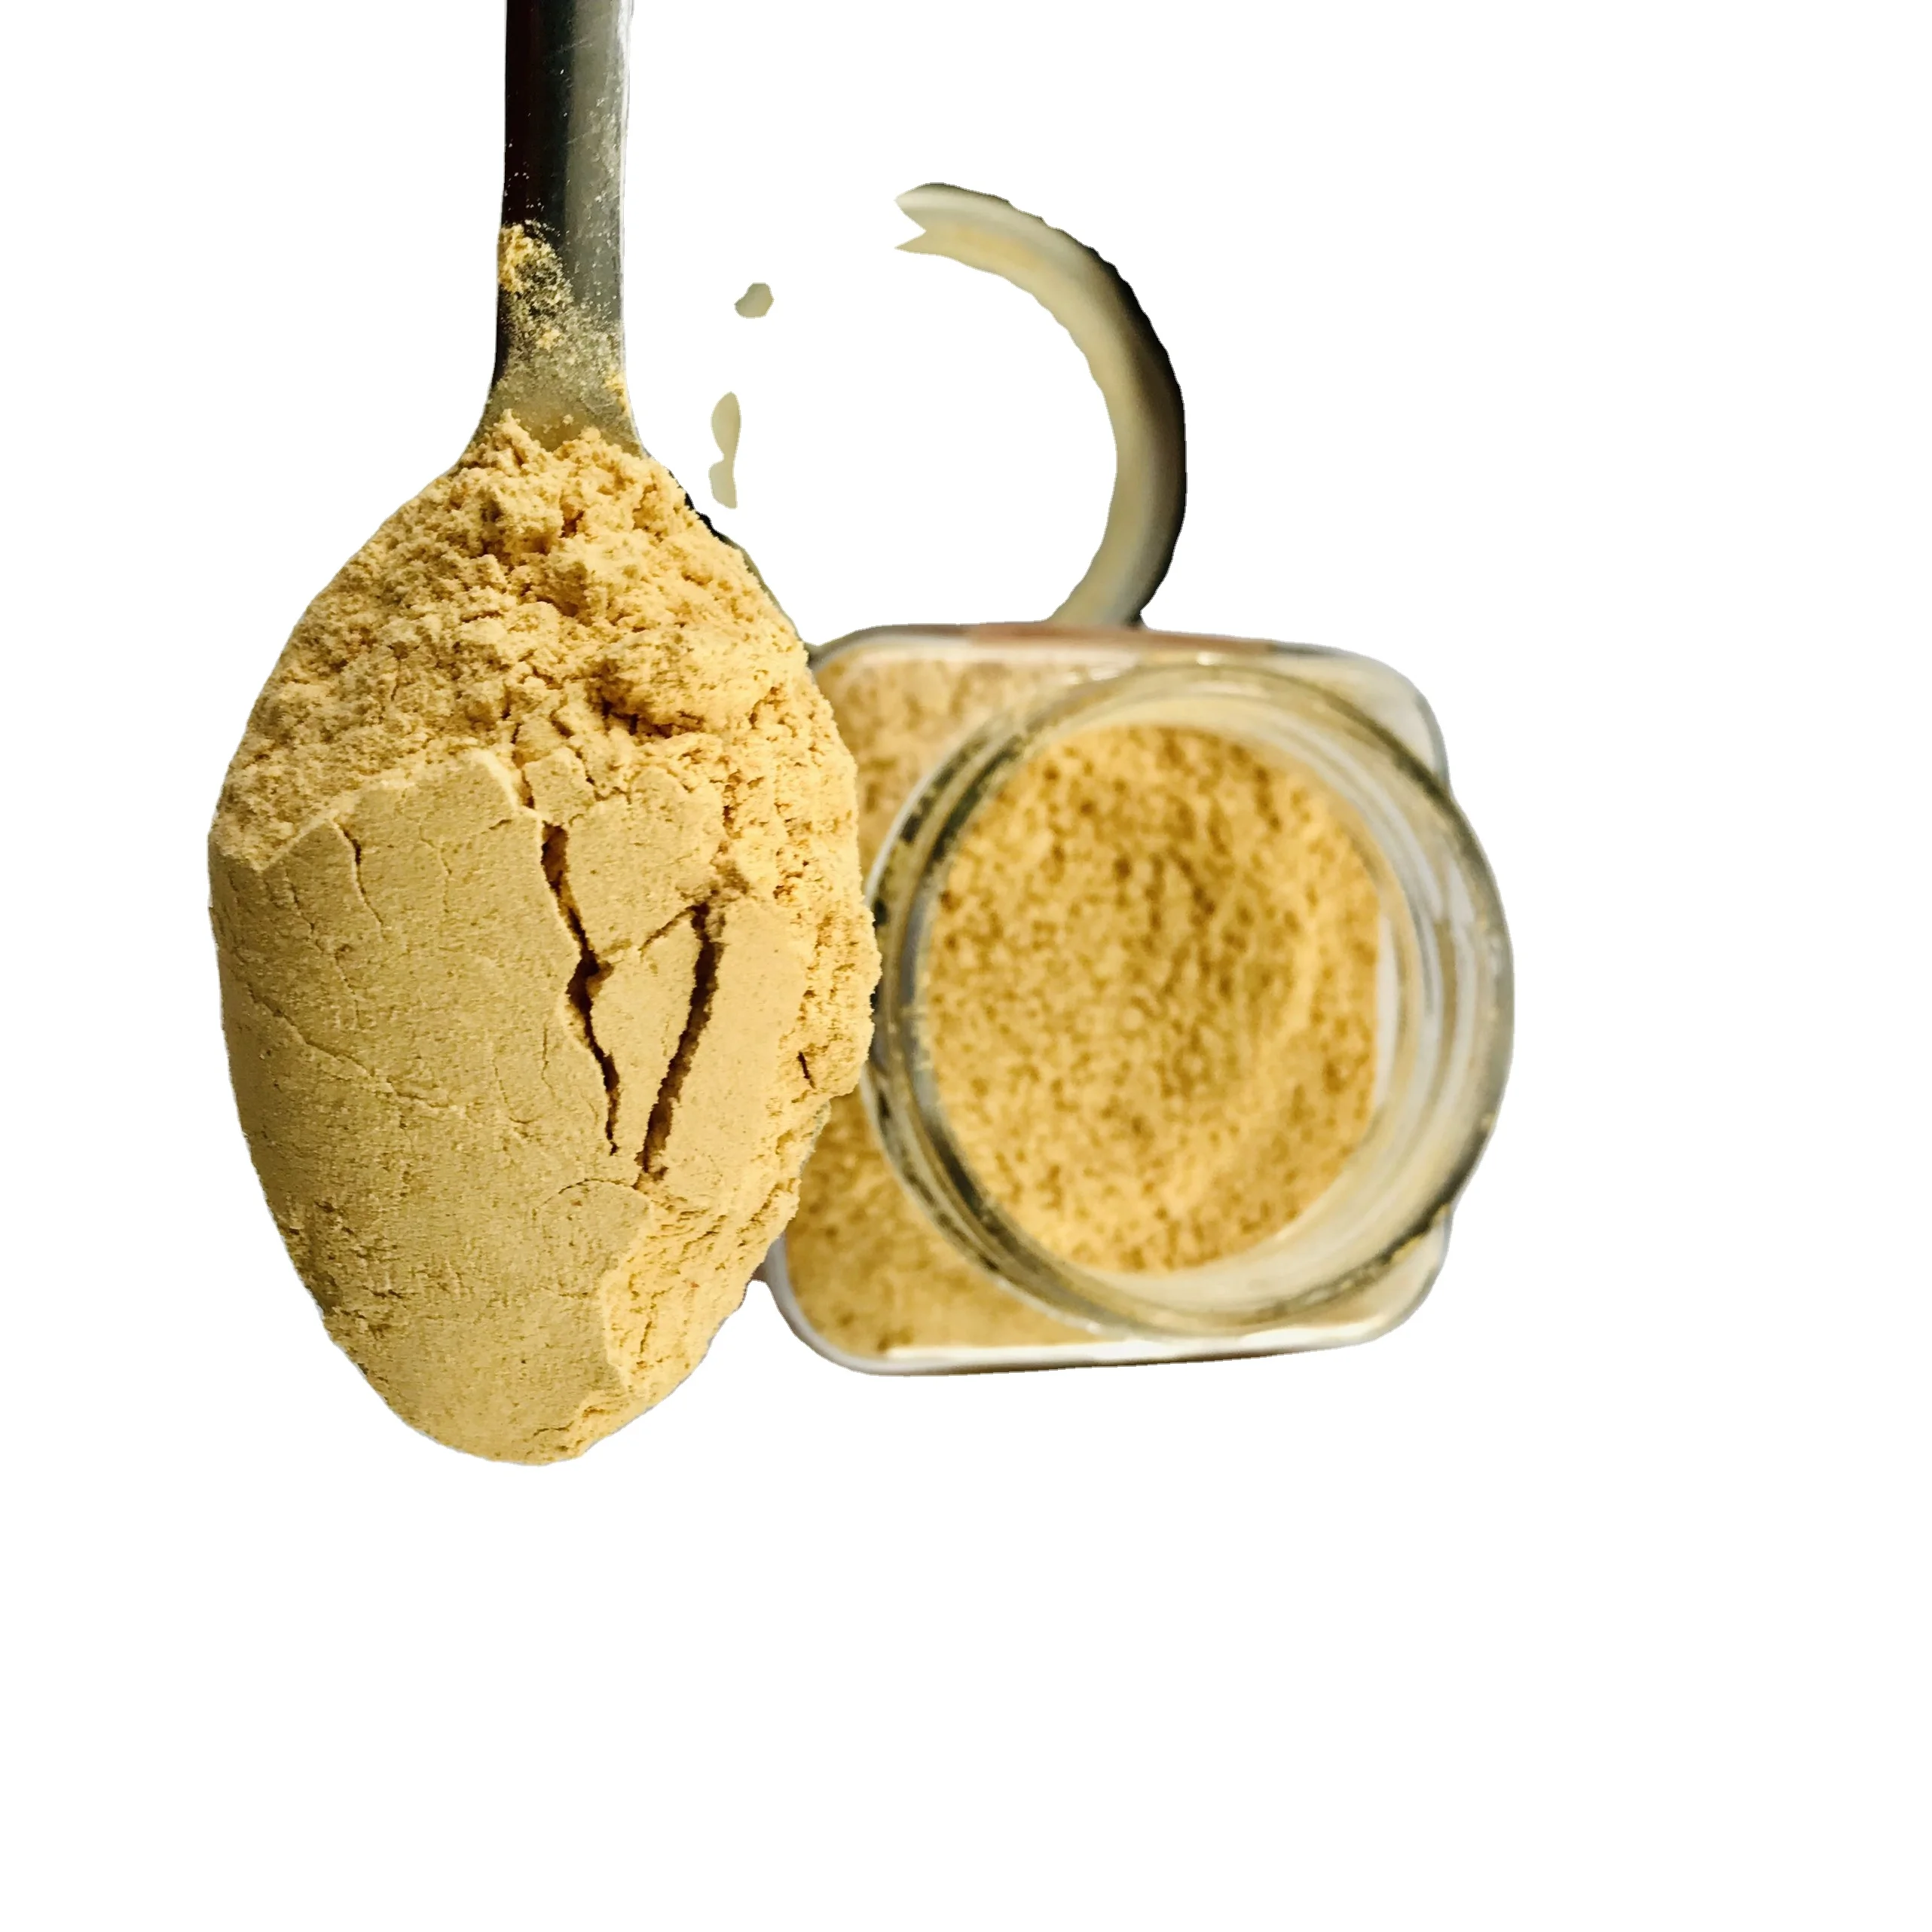 
Cordyceps Militaris Mushroom Powder Healthy Product 100% Natural Herbal High Quality Product Good For Health Providing Energy 